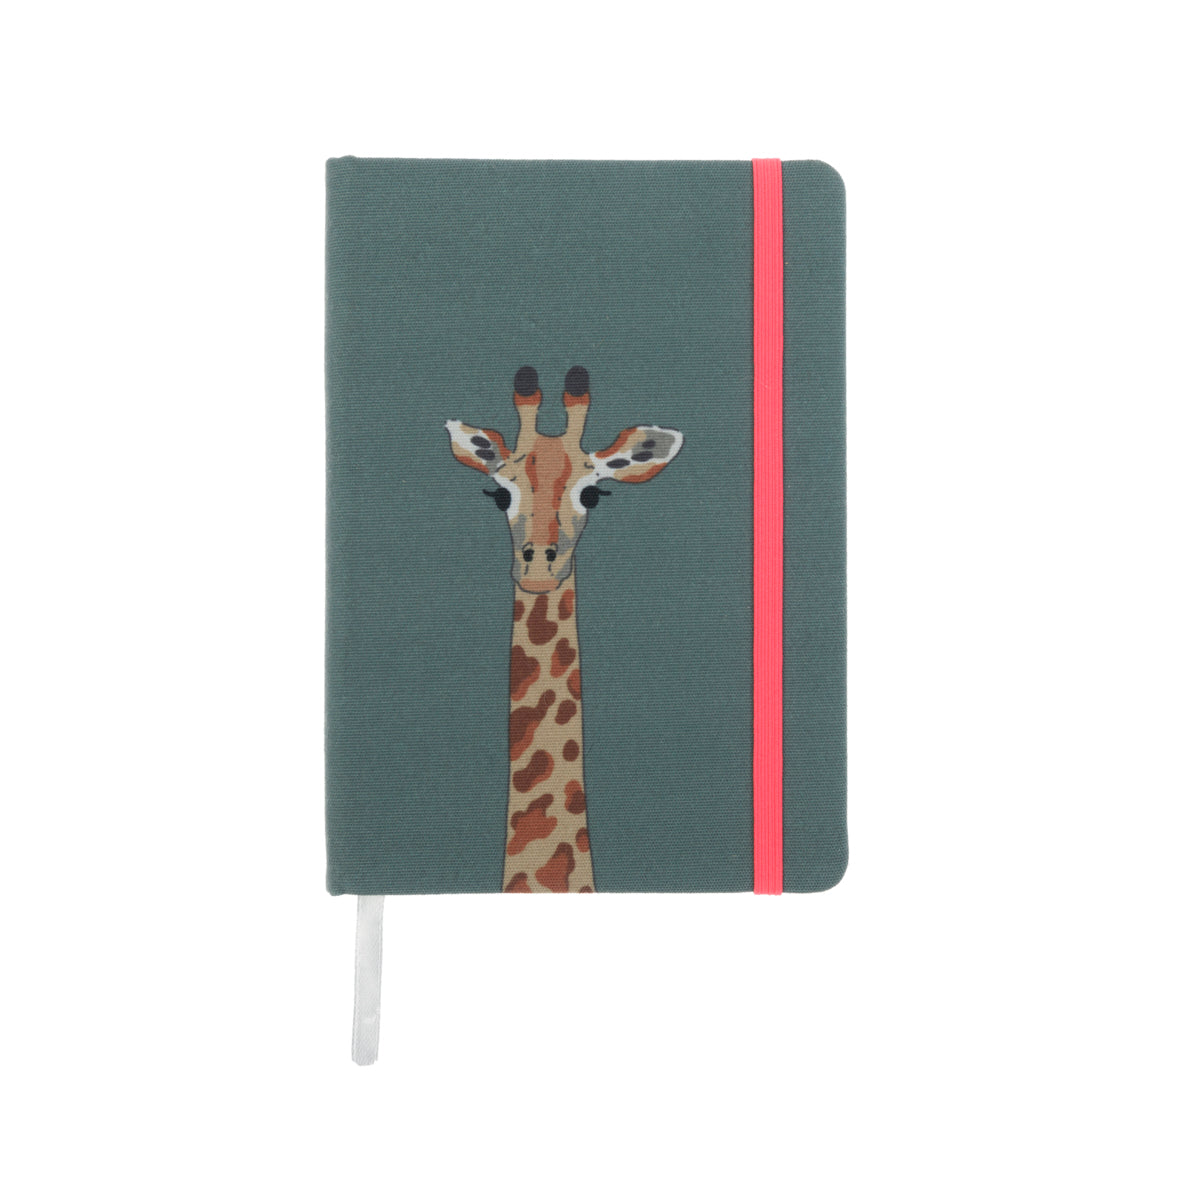 B6 notebook in Sophie Allport Giraffe design